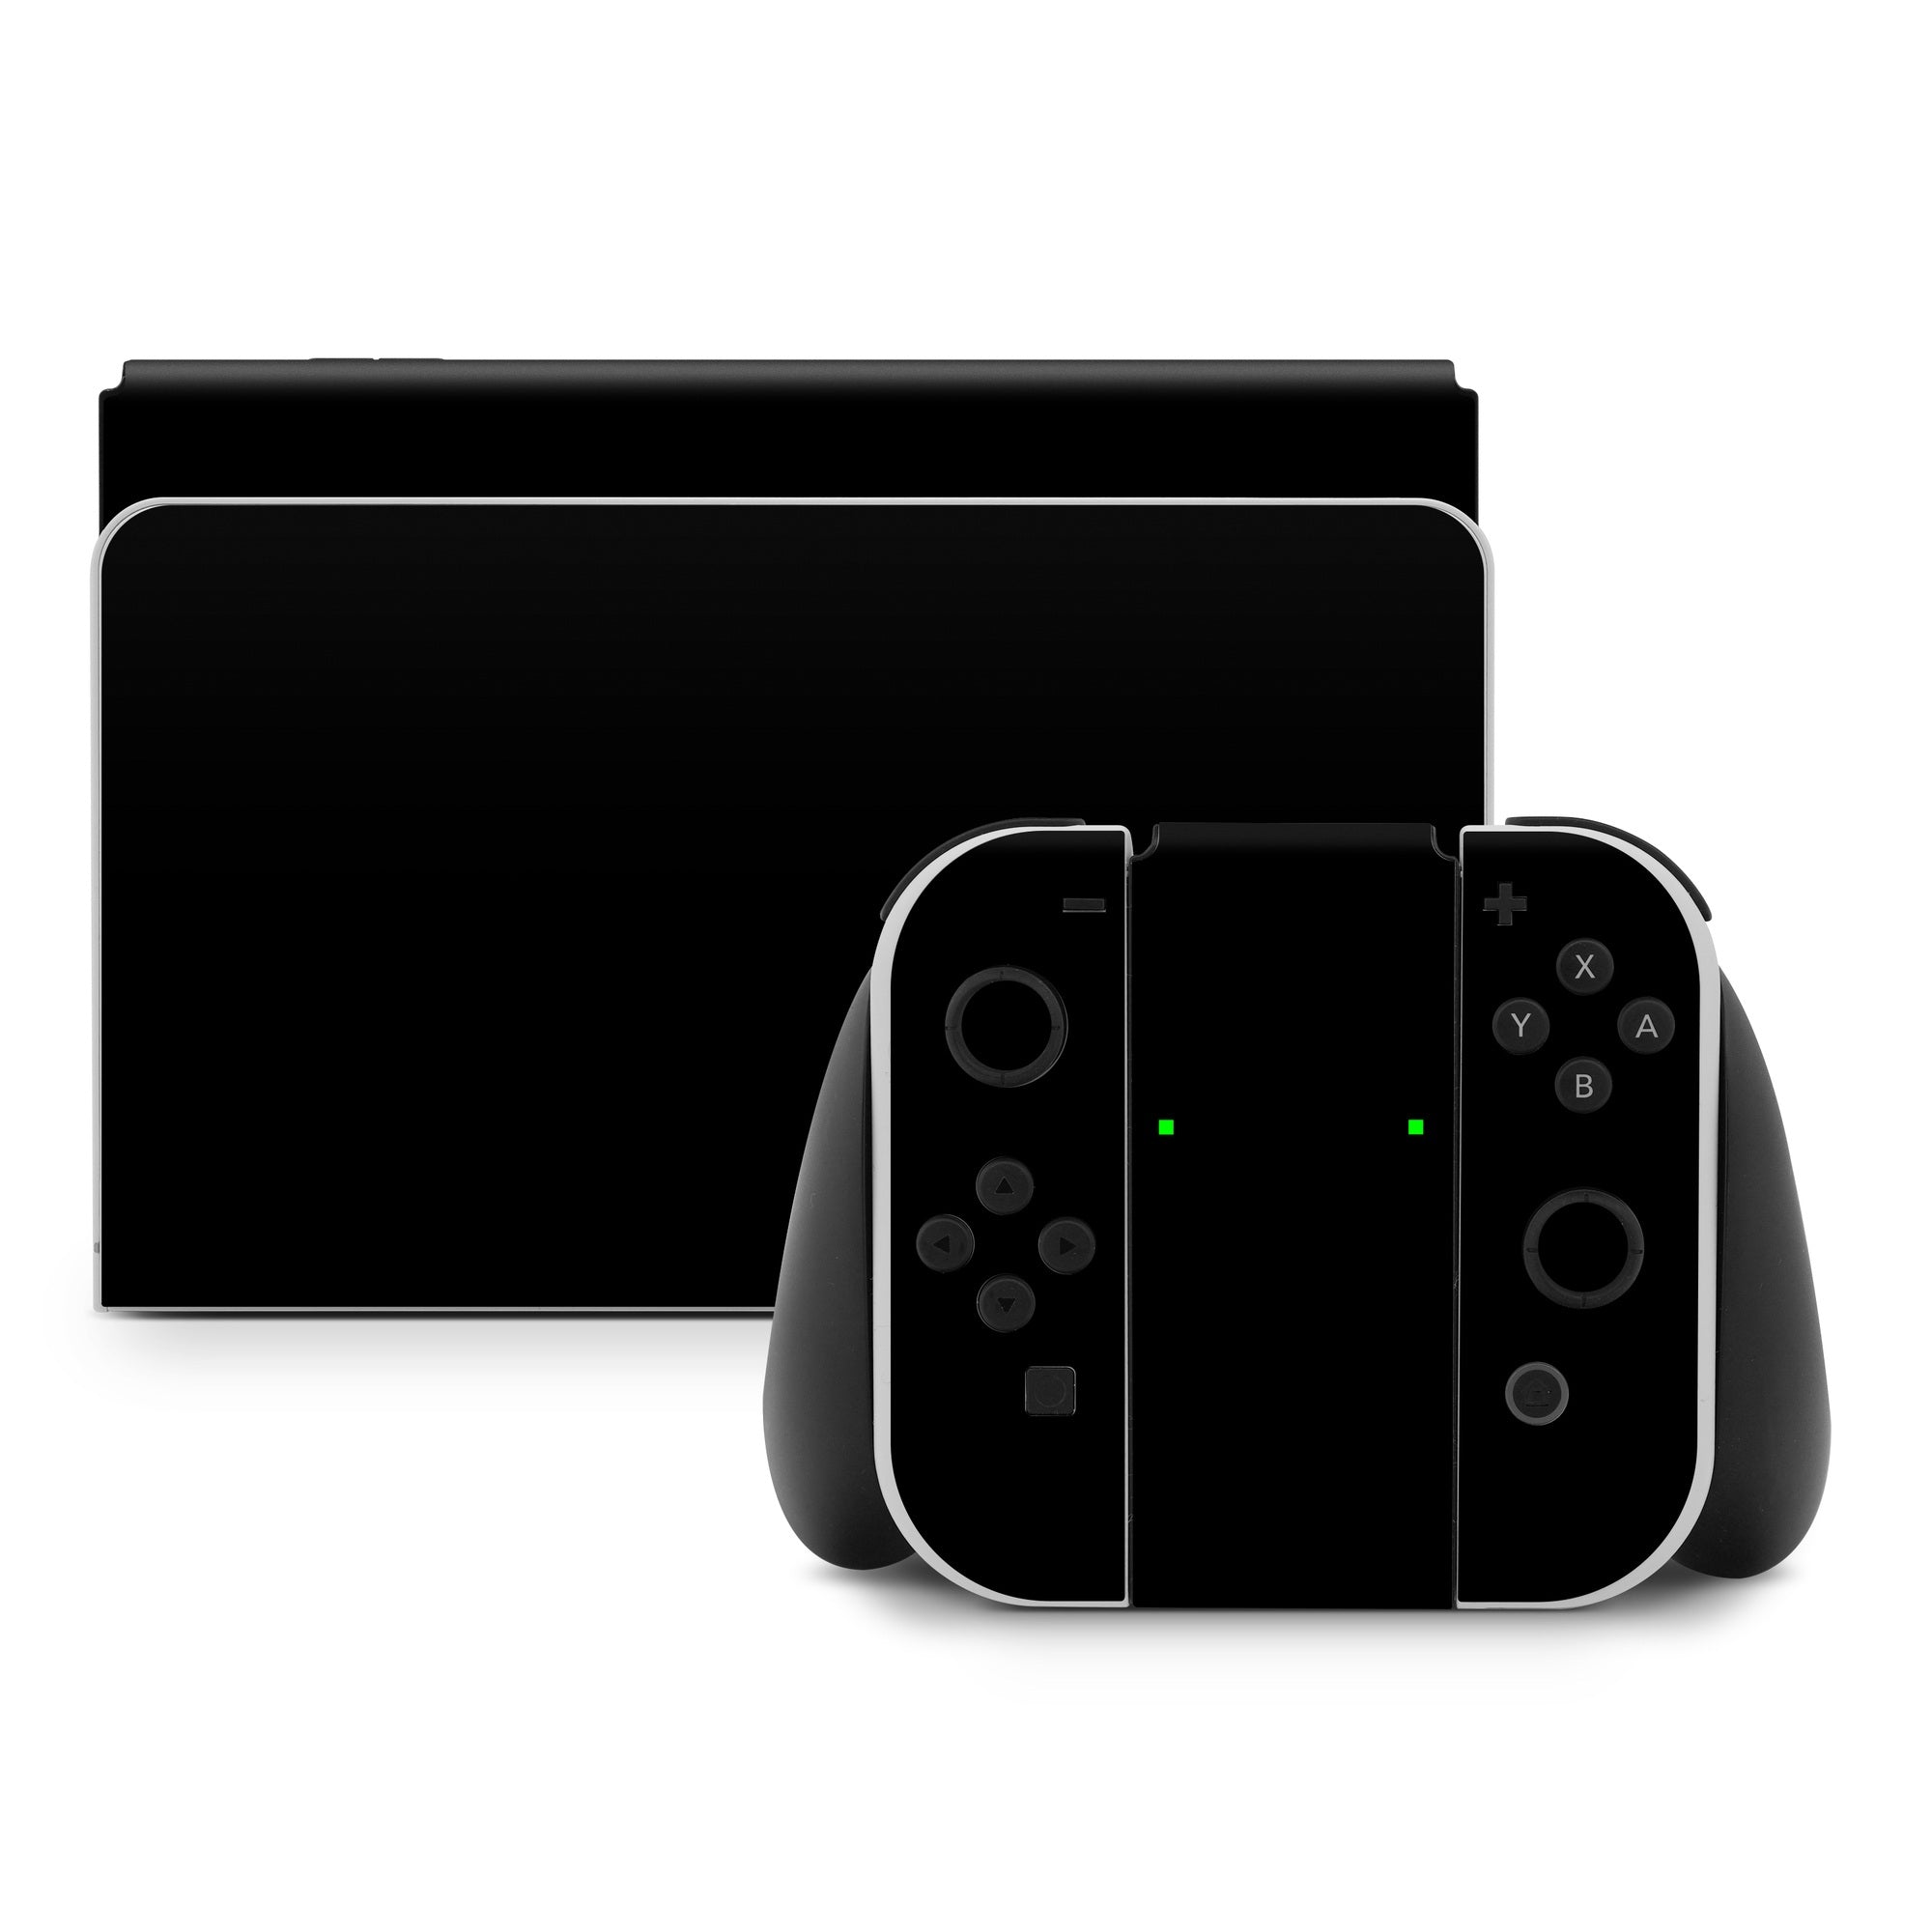 Solid State Black - Nintendo Switch Skin